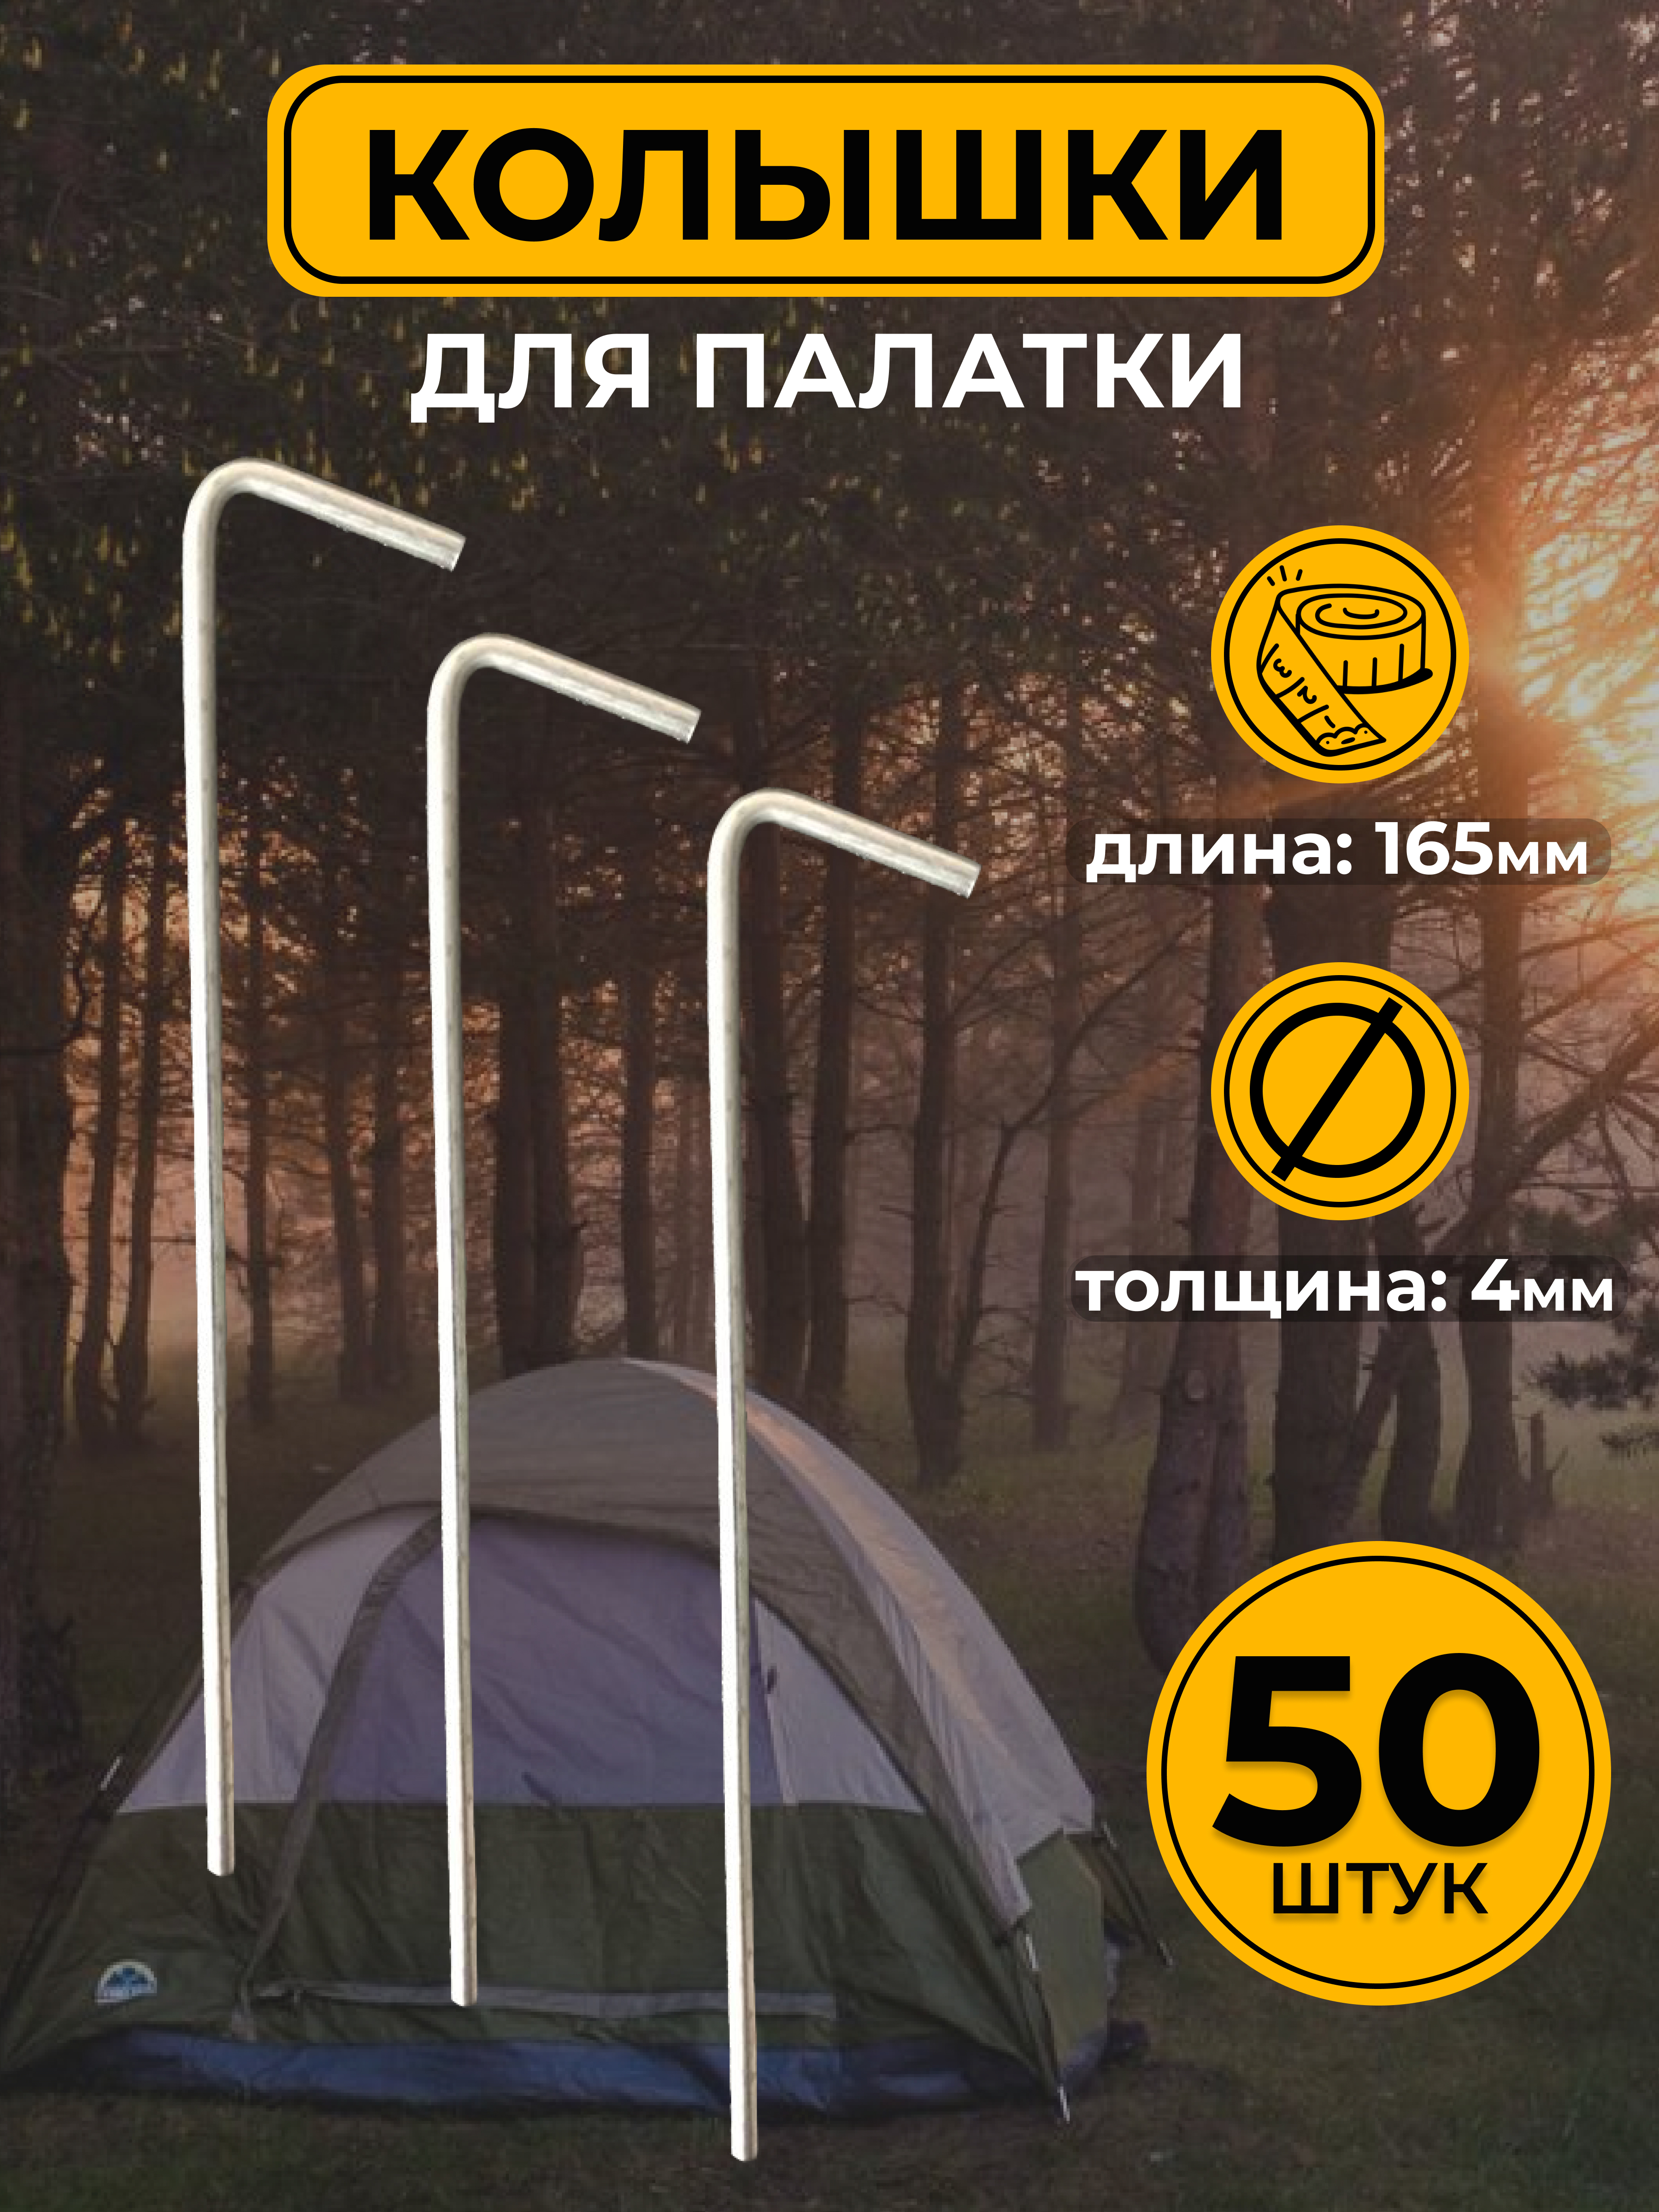 Колышки для палаток